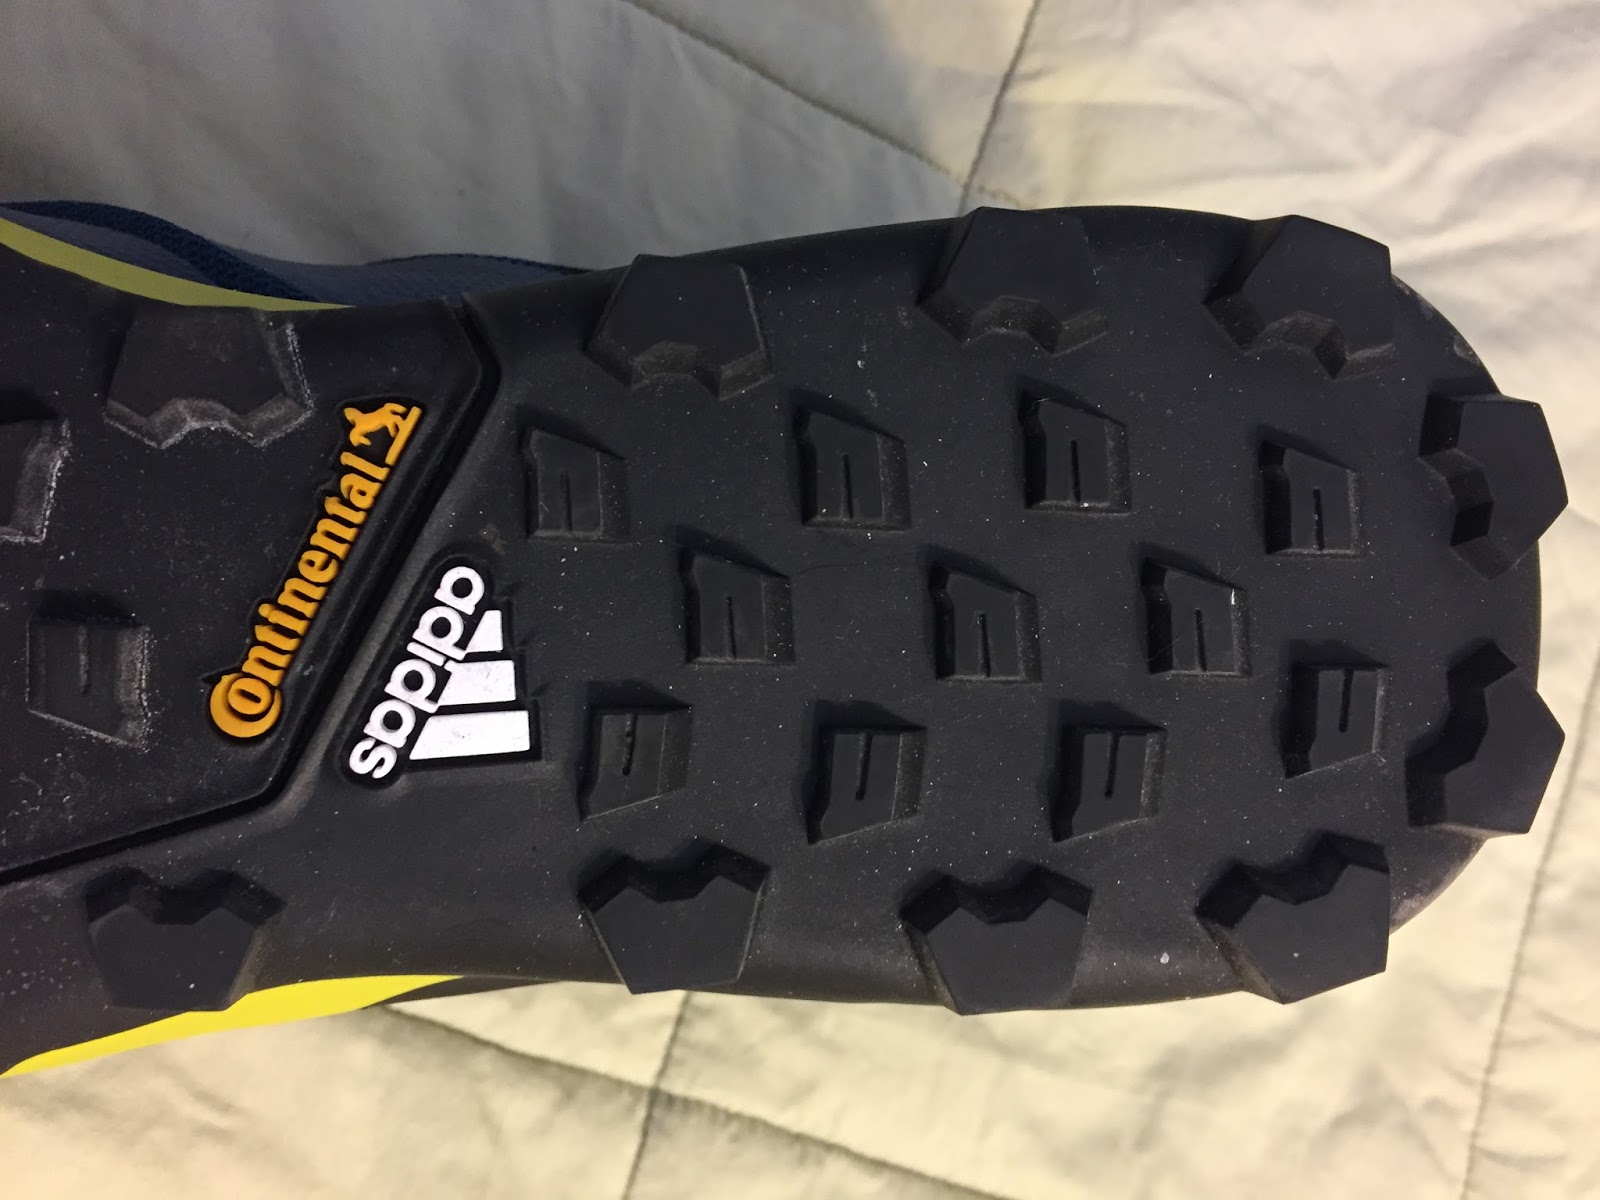 emocionante escanear apaciguar Road Trail Run: adidas Terrex Trailmaker - Up Tempo Trail Trainer/Racer  with Amazing Grip and Versatility